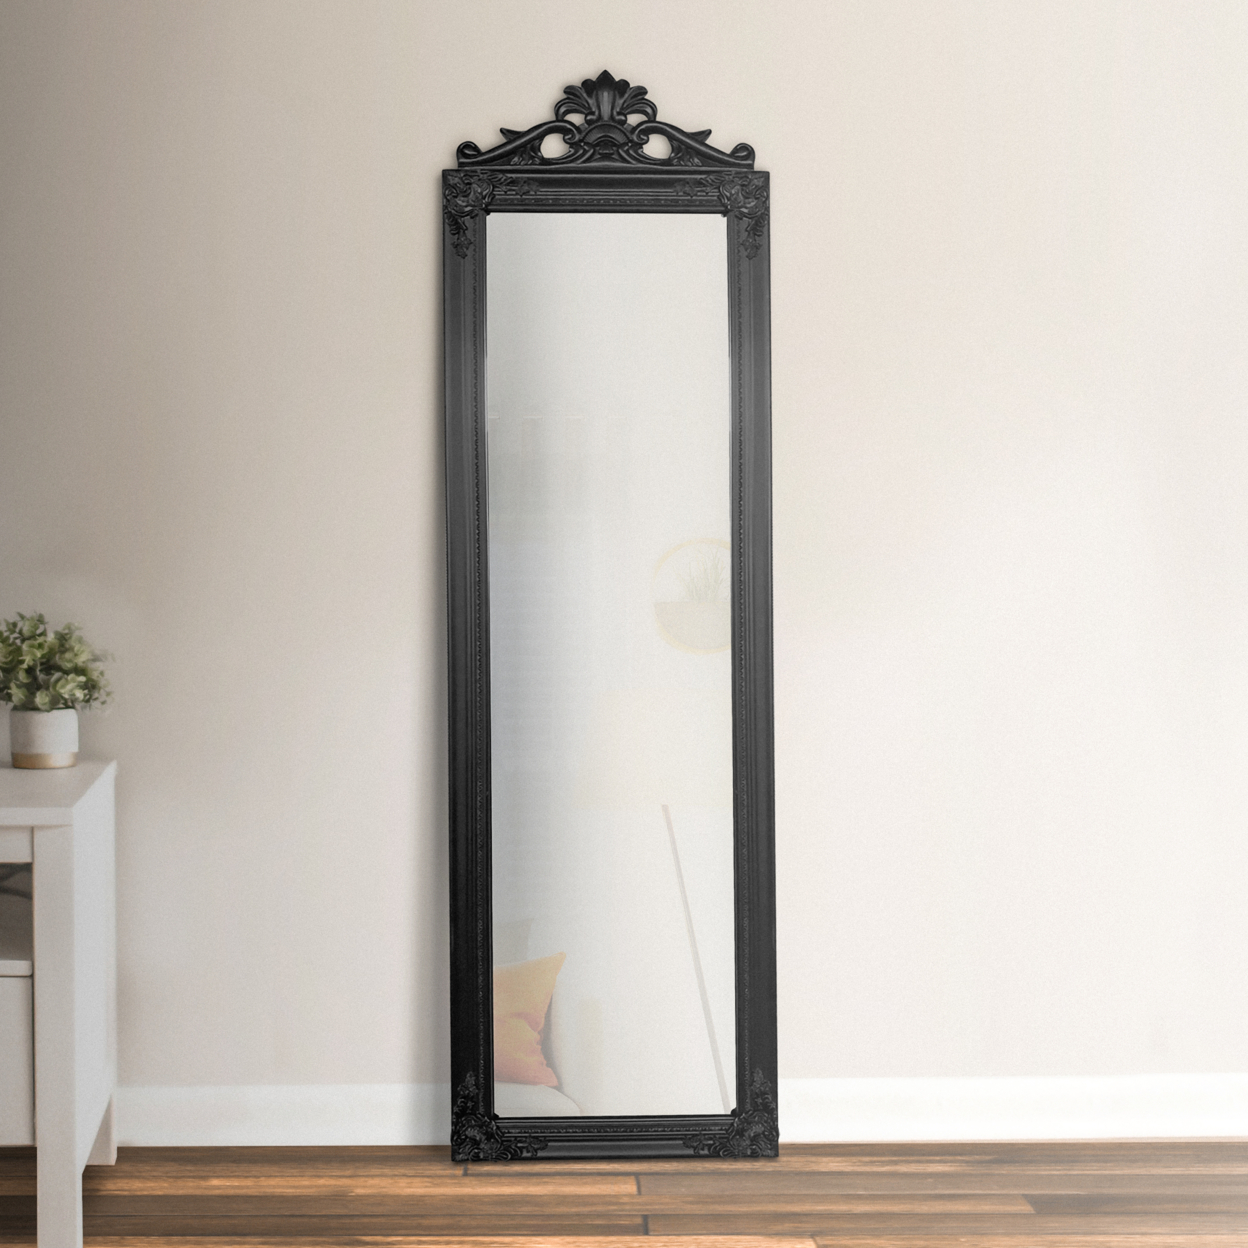 Gisela Full Length Standing Mirror With Decorative Design, Black- Saltoro Sherpi